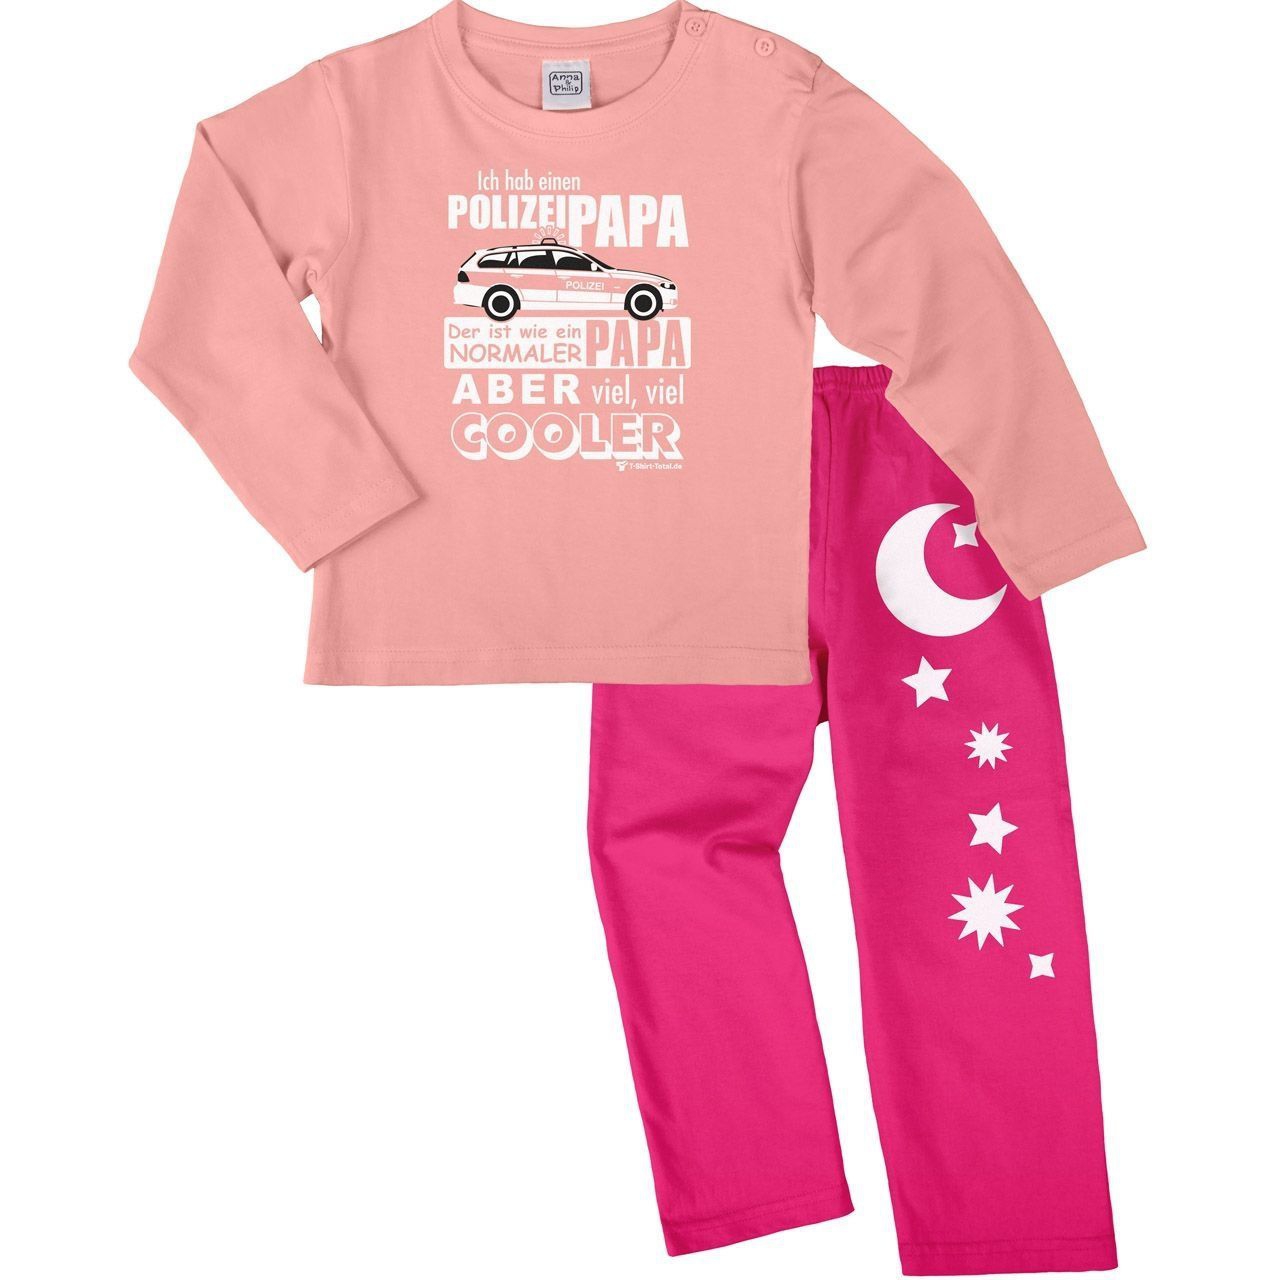 Polizei Papa Pyjama Set rosa / pink 110 / 116